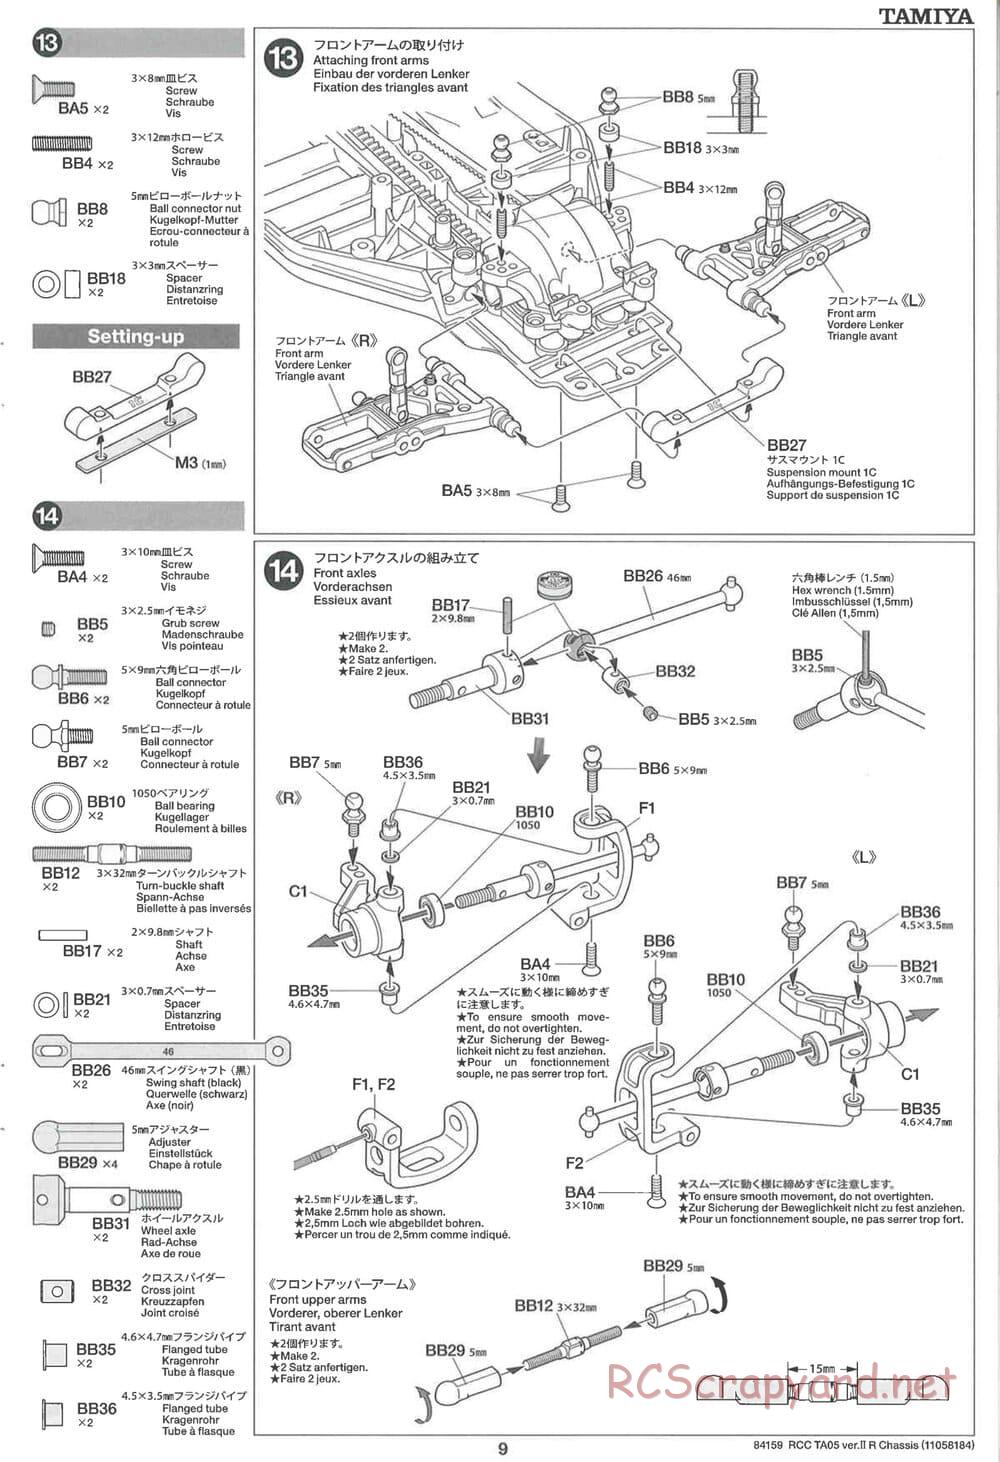 Tamiya - TA05 Ver.II R Chassis - Manual - Page 9